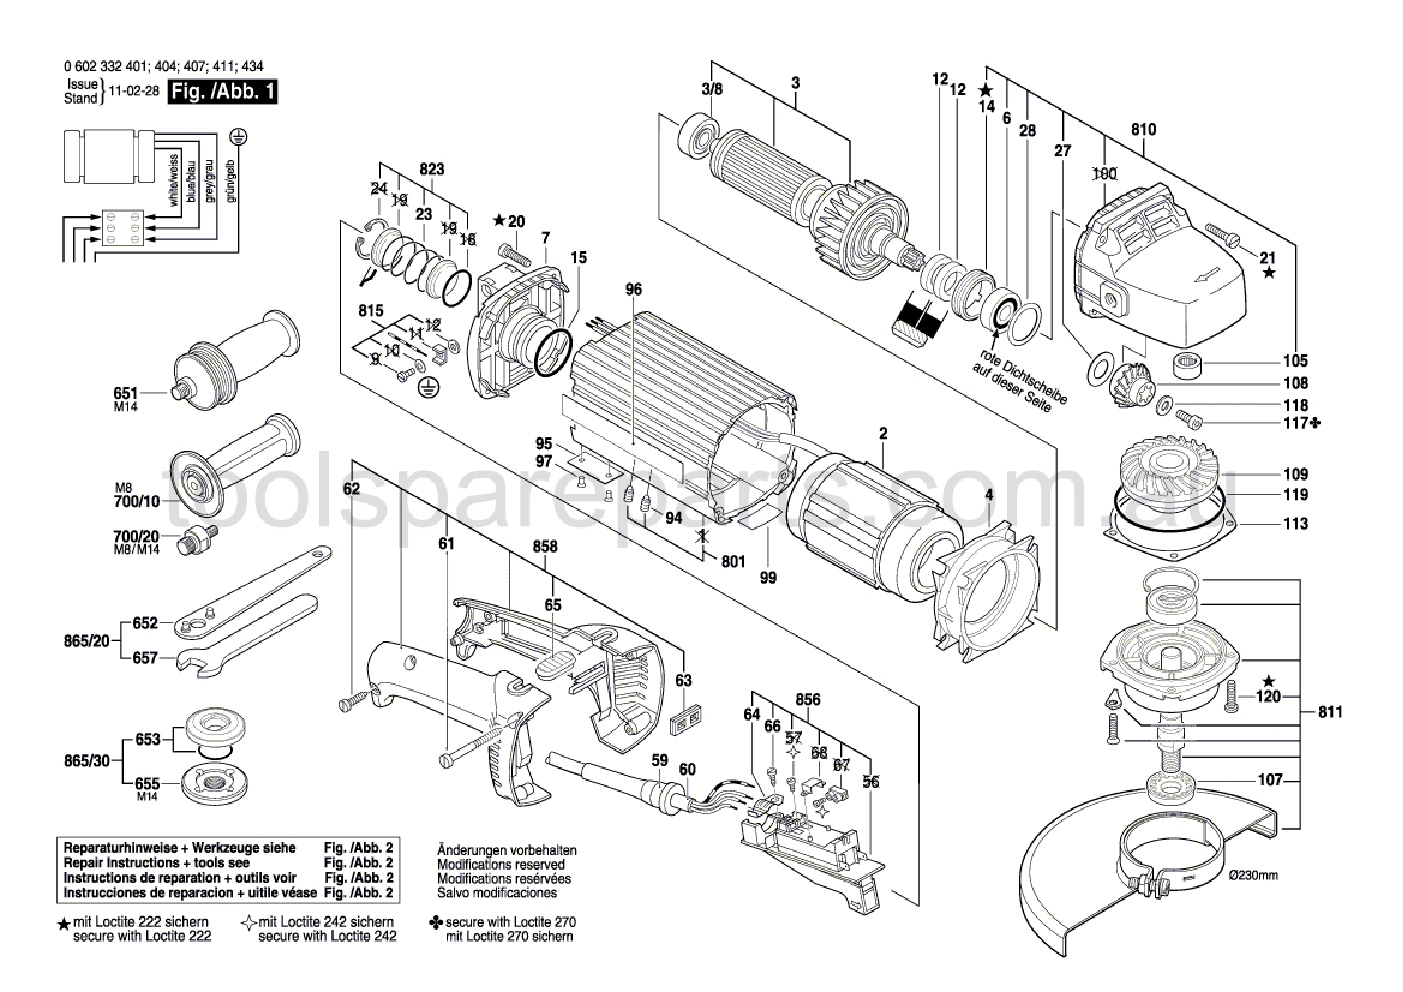 Bosch ---- 0602332434  Diagram 1